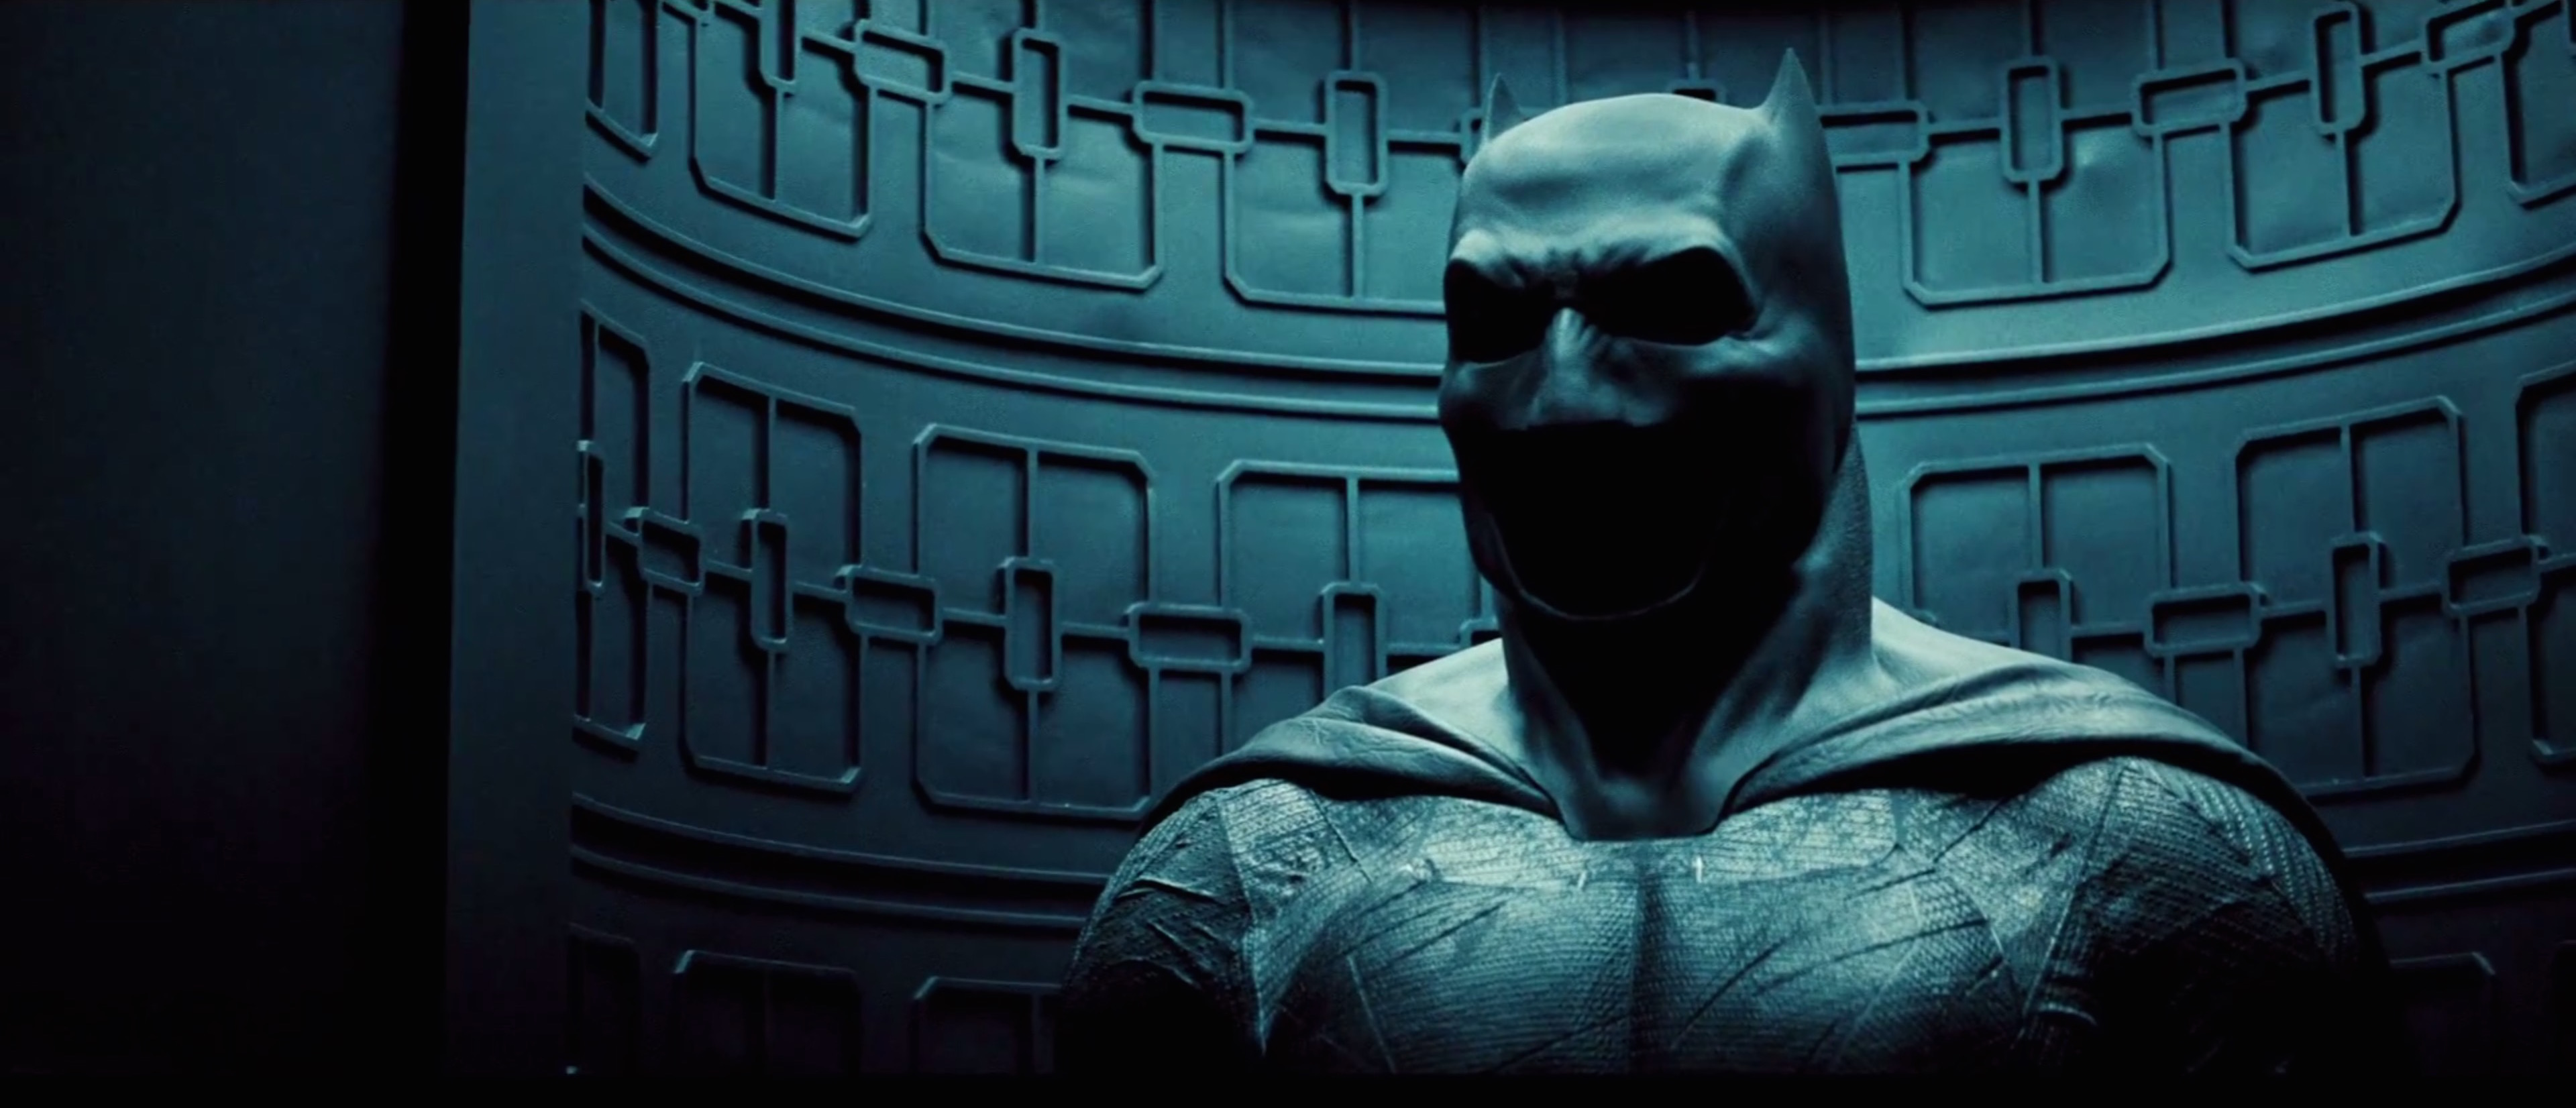 Batman Vs Superman Official Trailer 2 Fubiz Media